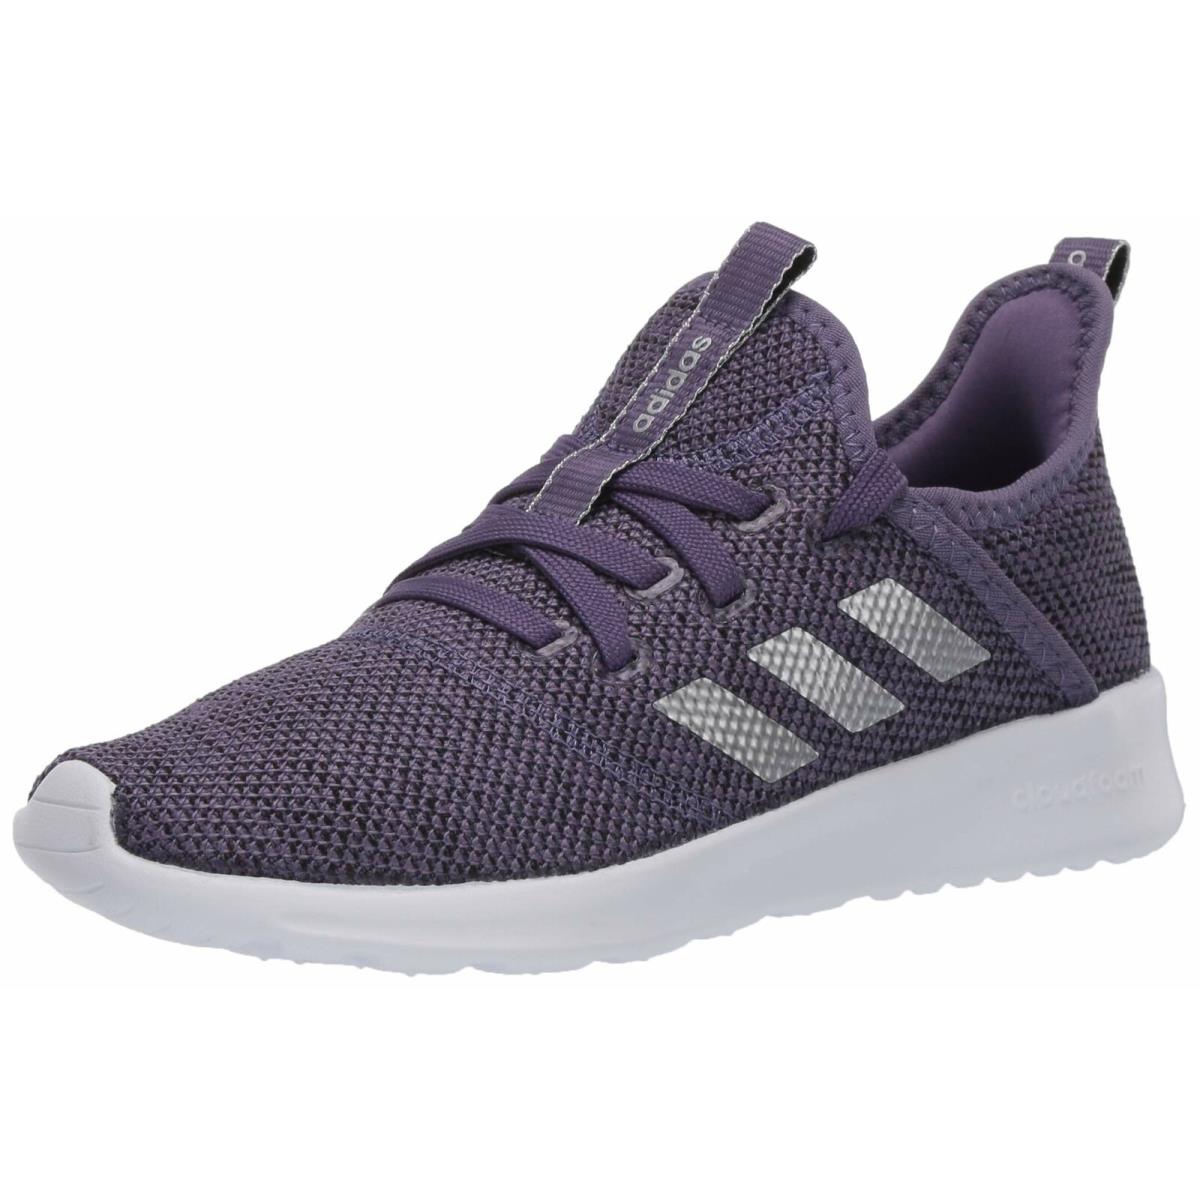 Adidas Childrens Cloudfoam Pure Running Shoe EG3466 Purple/silver Size 6 - Purple